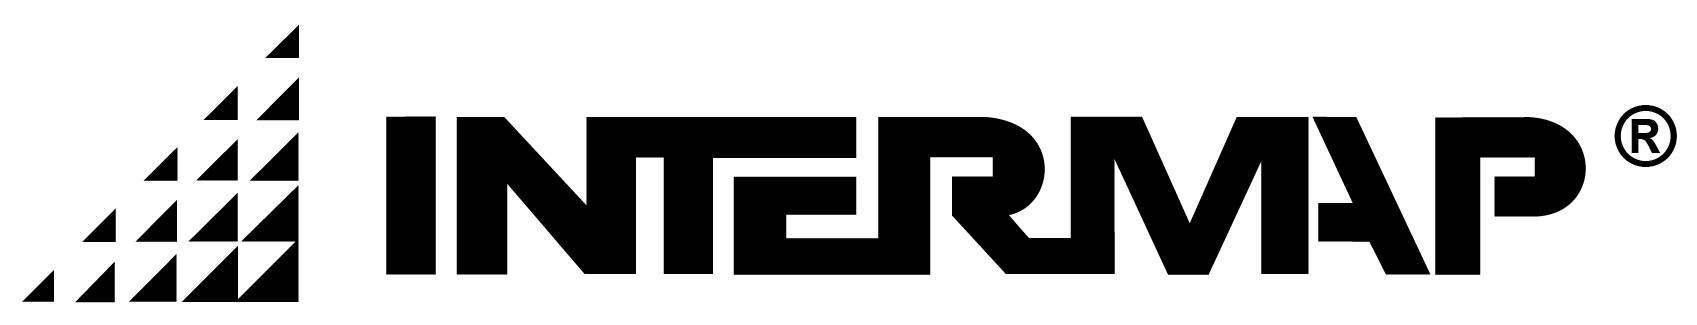 Intermap Logo 2019 - Black-01